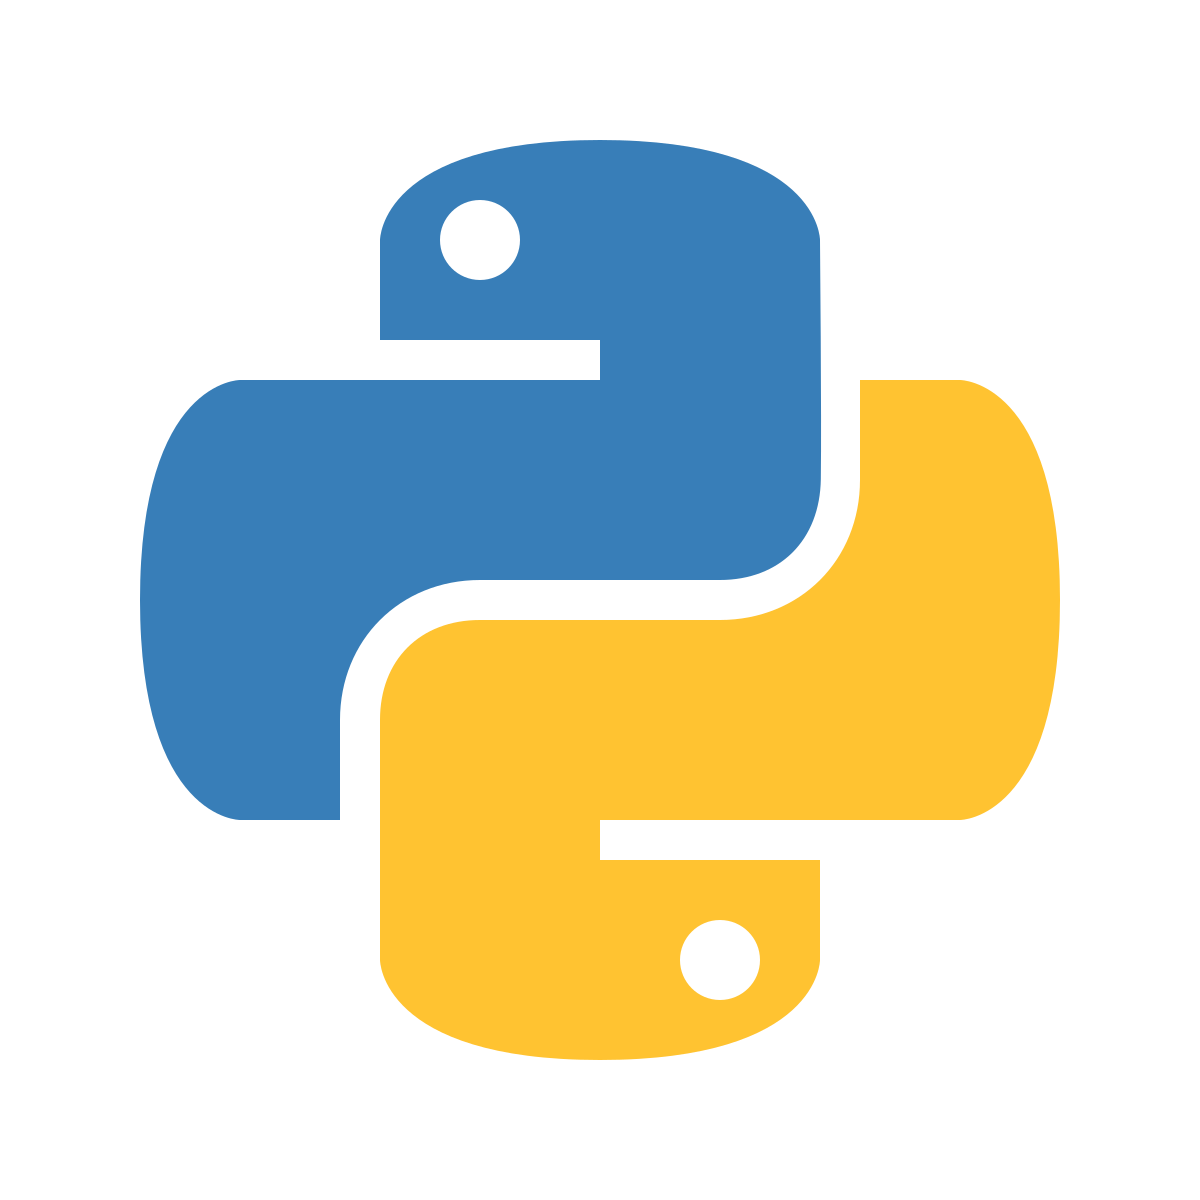 [Python] for loop - enumerate, zip 사용